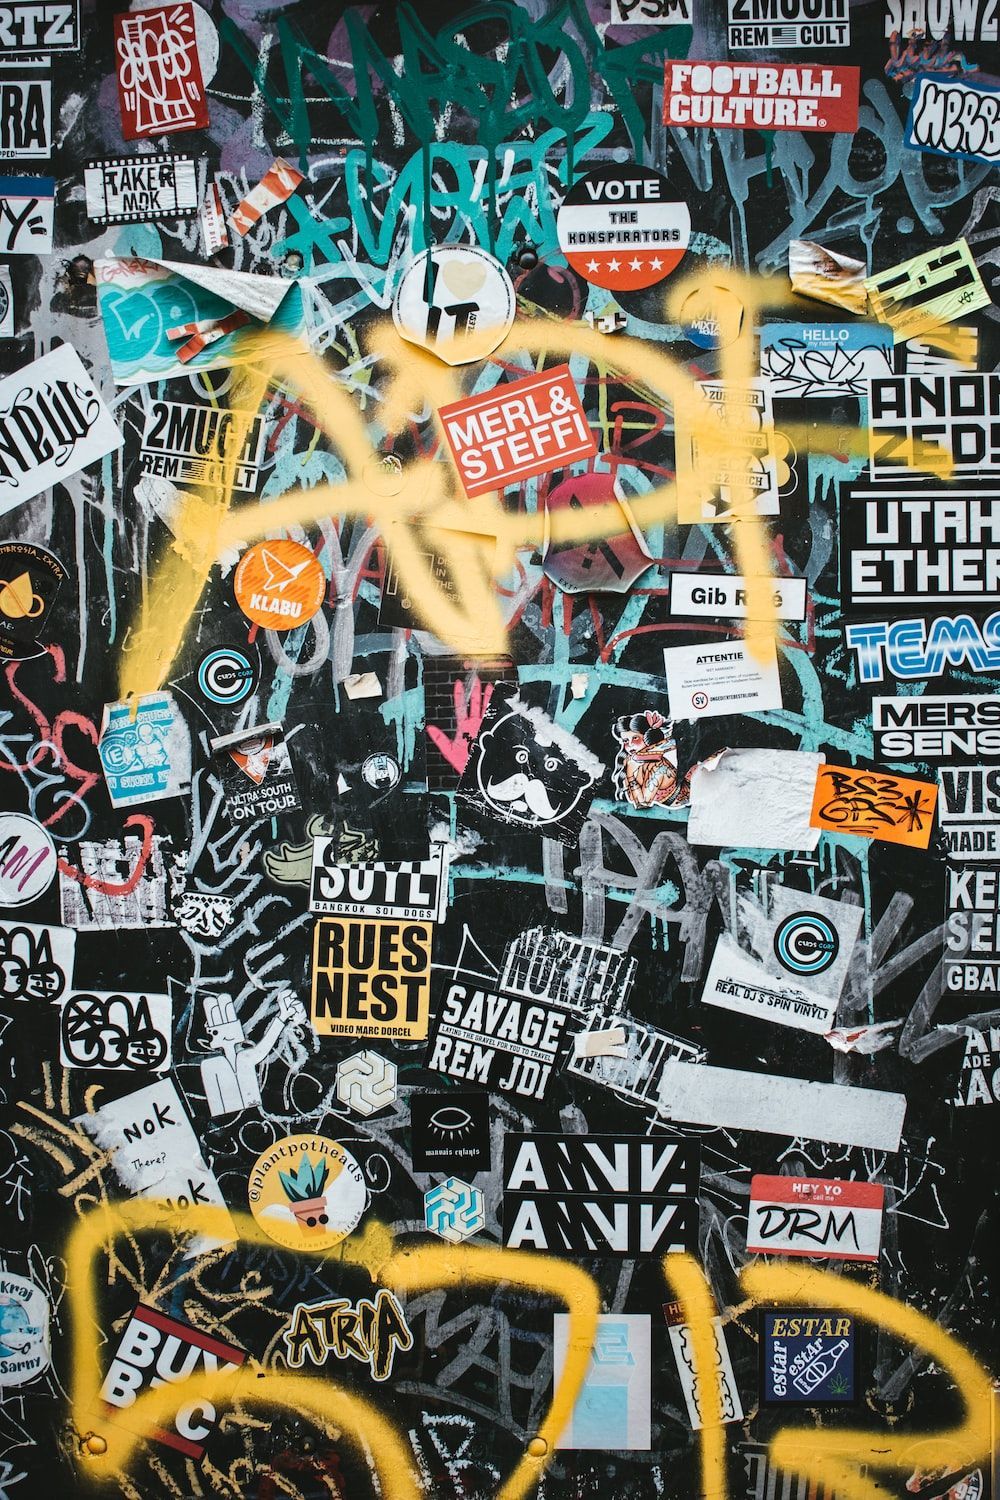 A wall with many stickers on it - Street art, graffiti, Vans